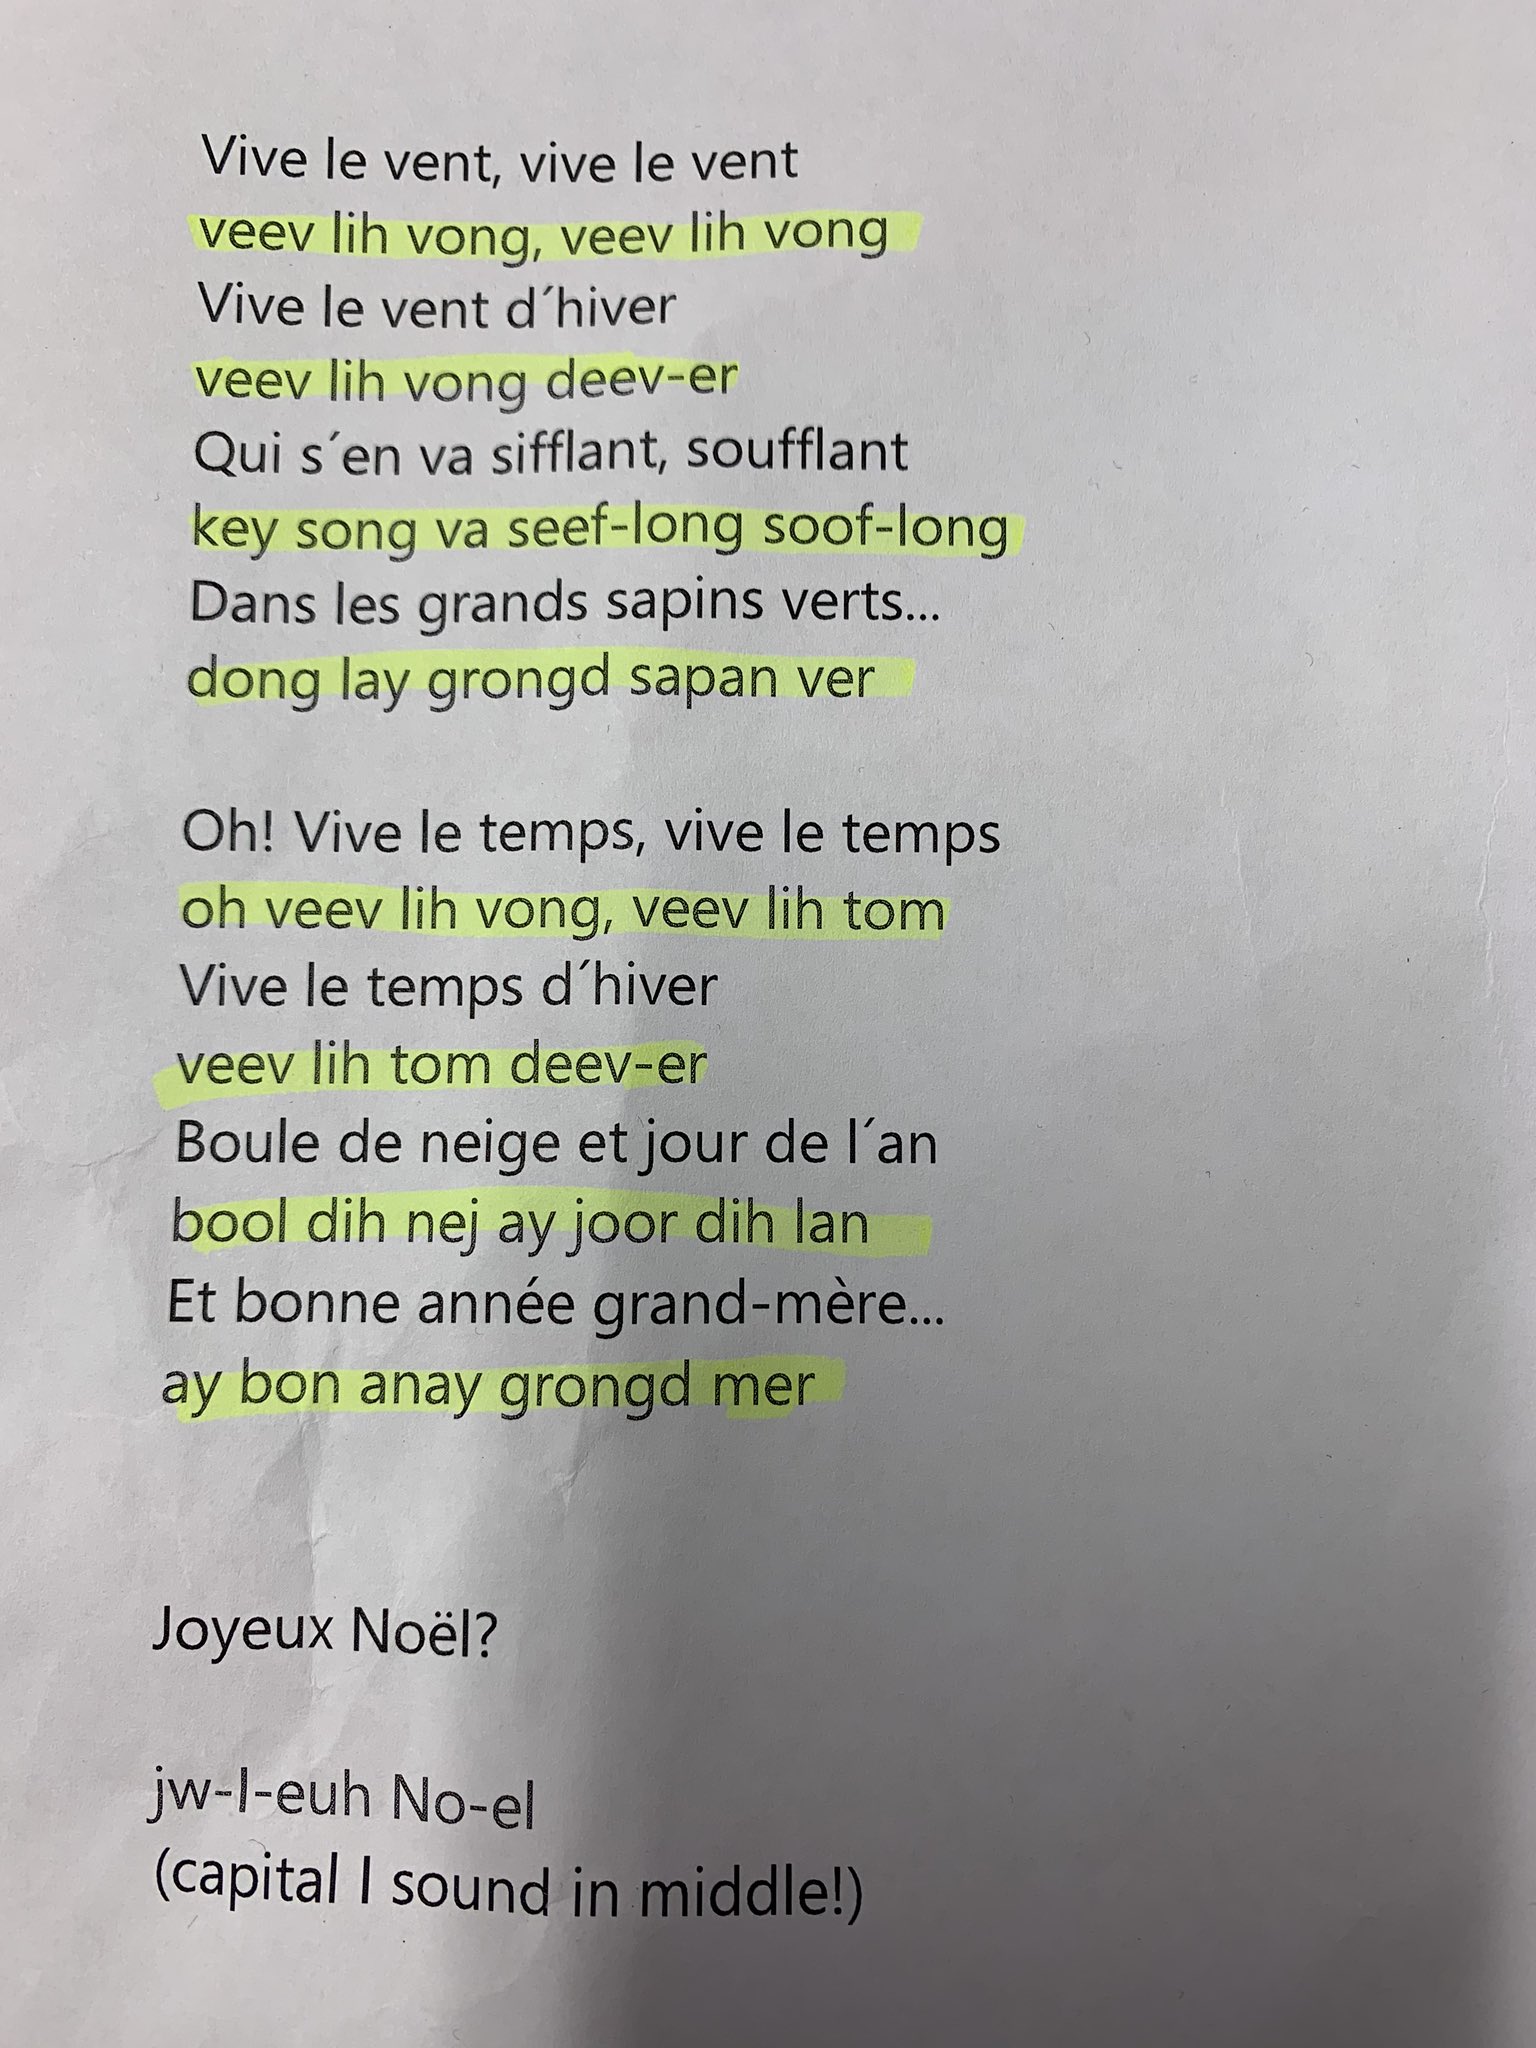 jingle bells in french vive le vent lyrics